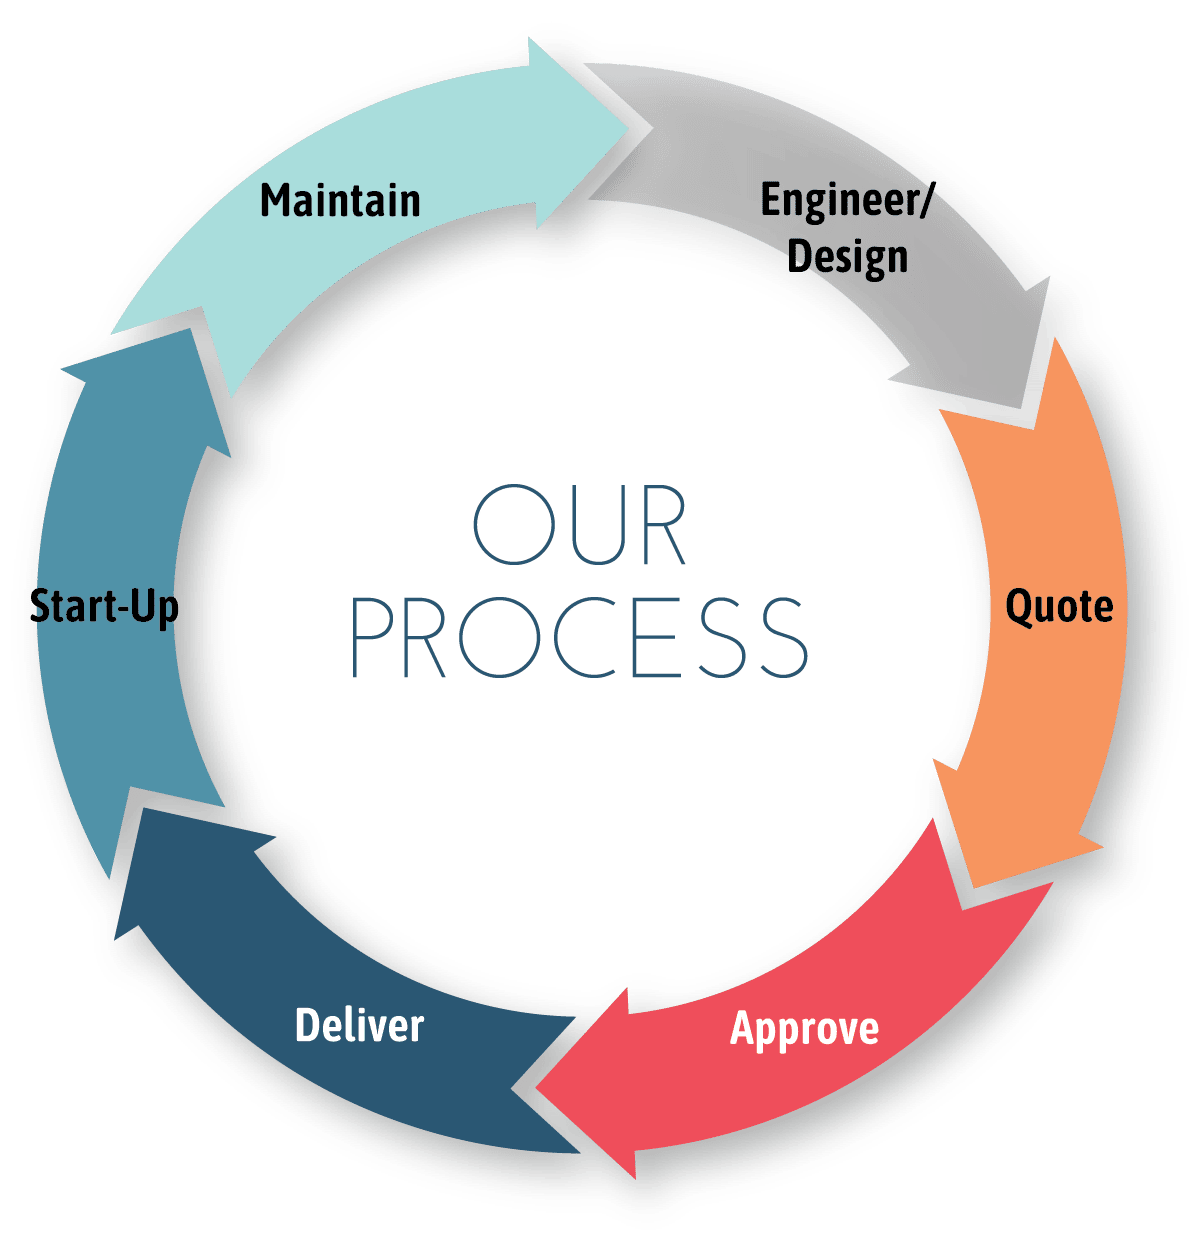 UEP's Process Diagram